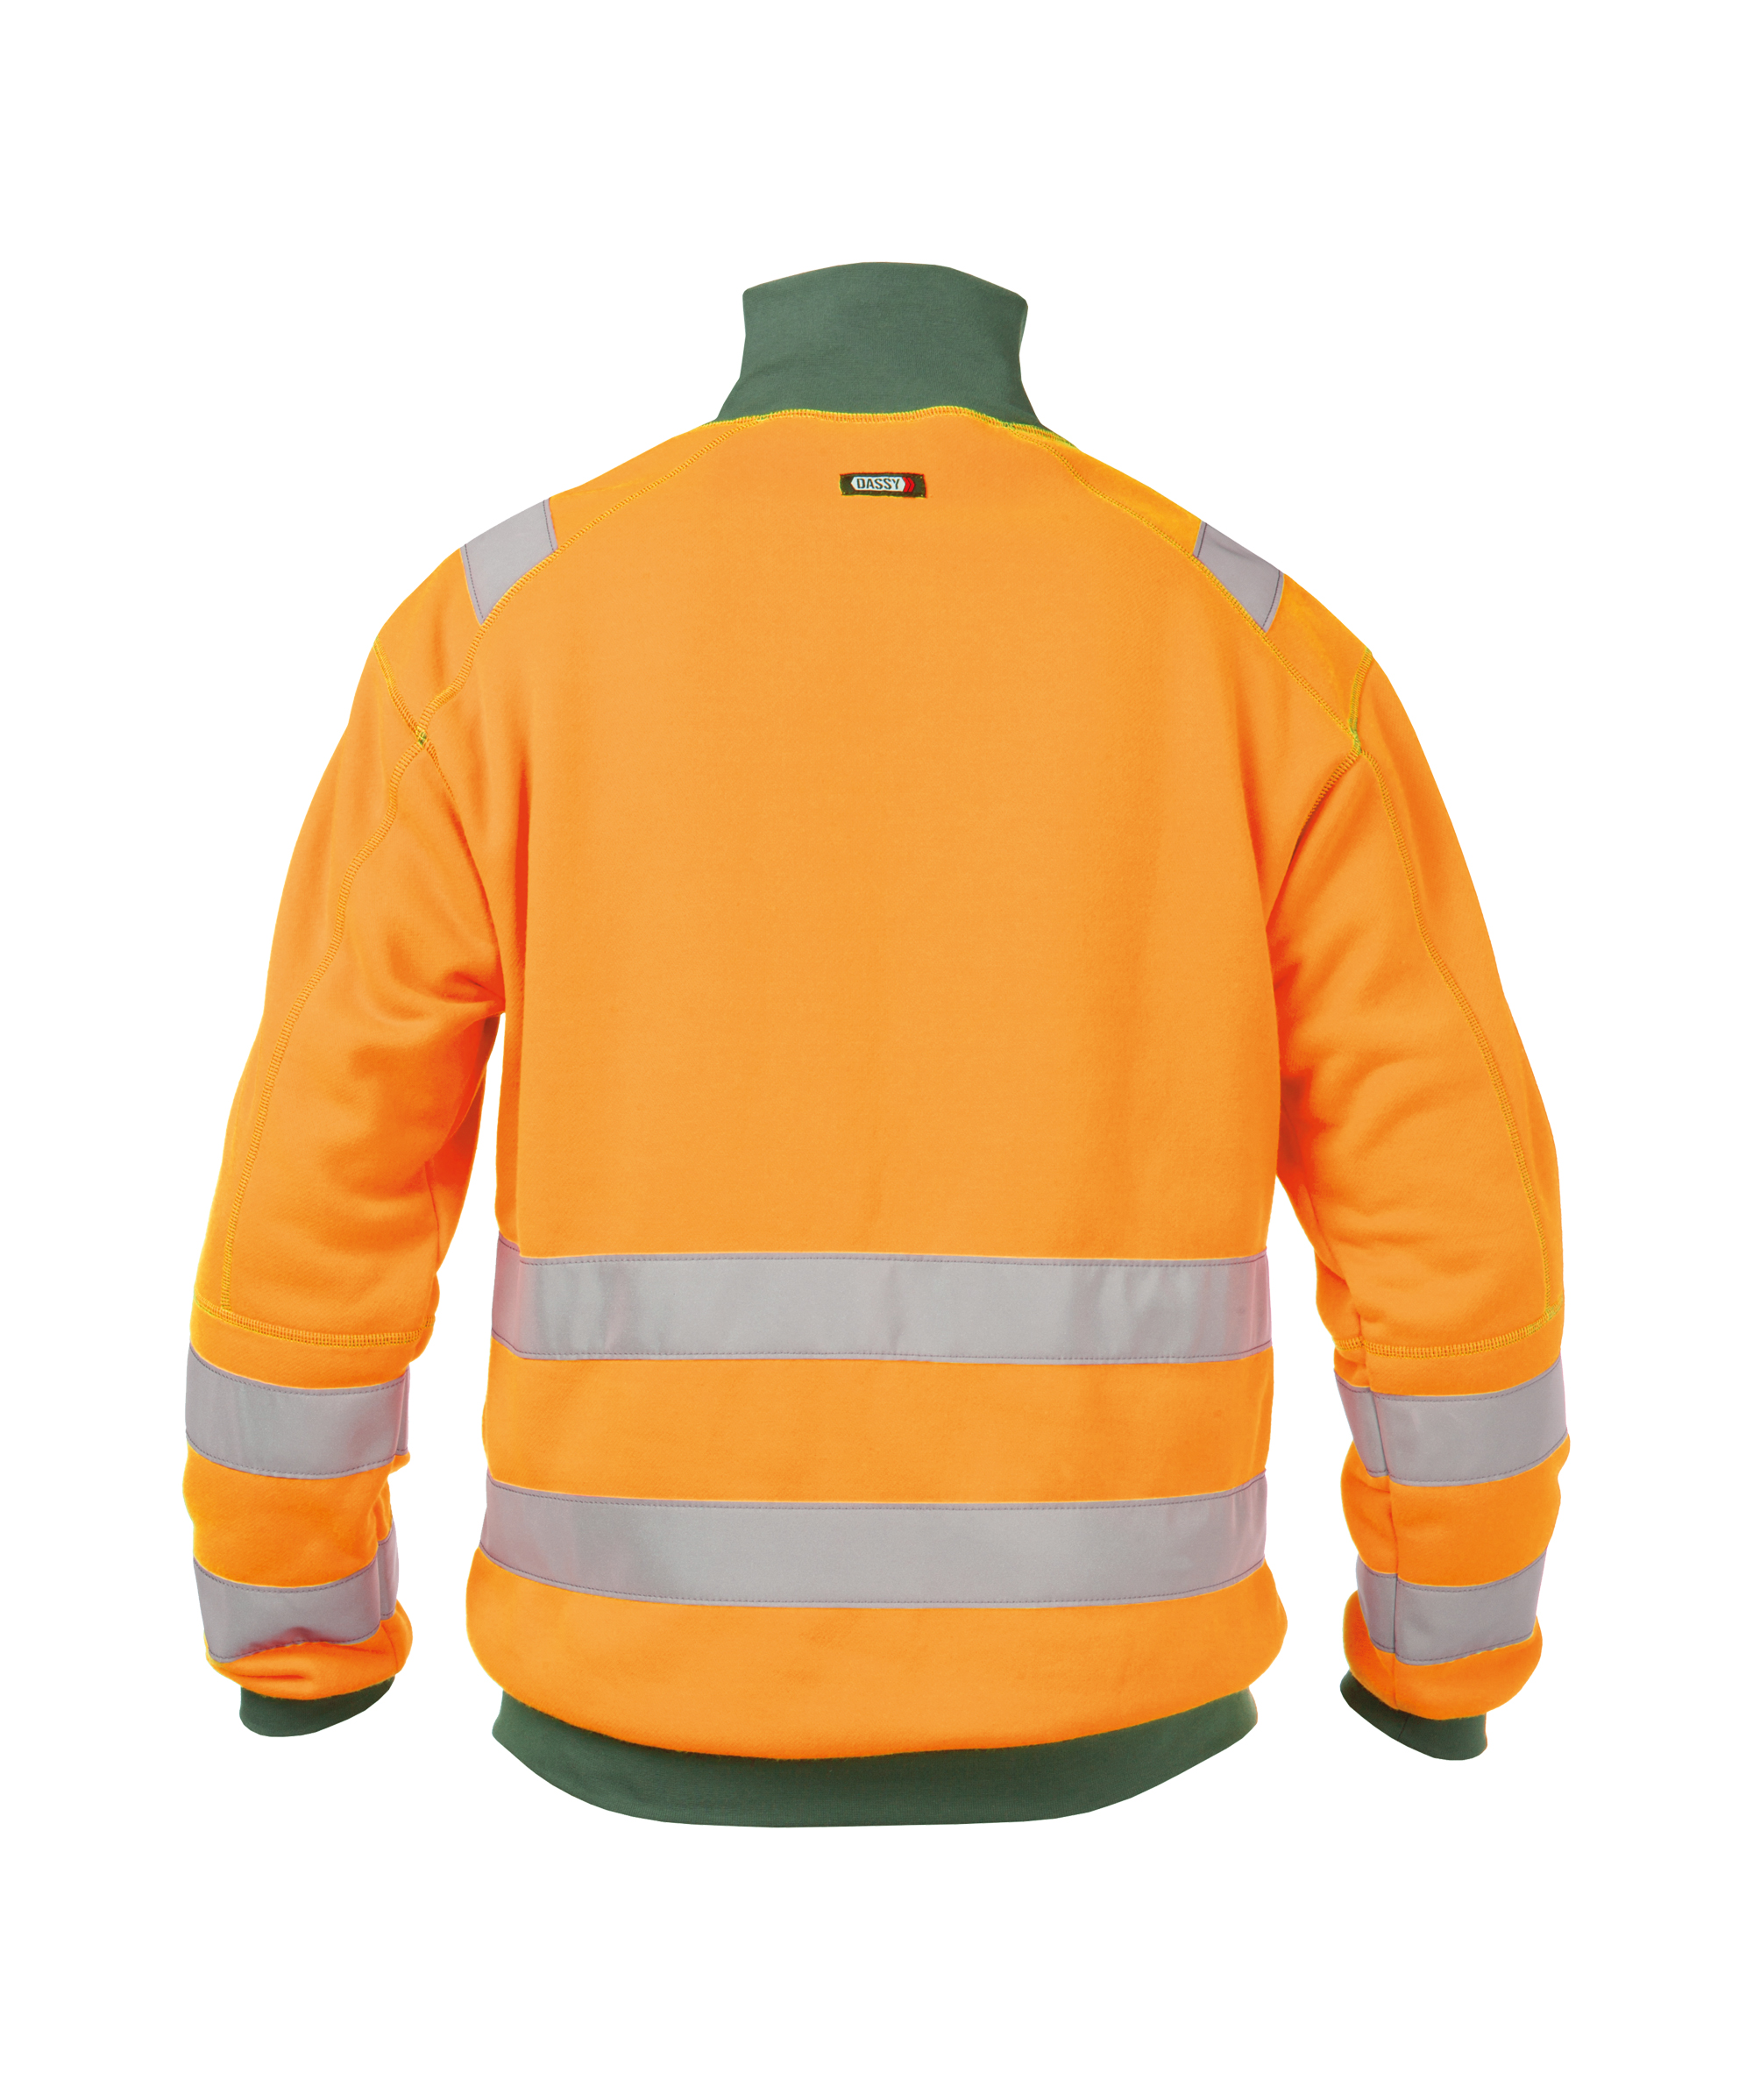 denver_high-visibility-sweatshirt_fluo-orange-bottle-green_back.jpg